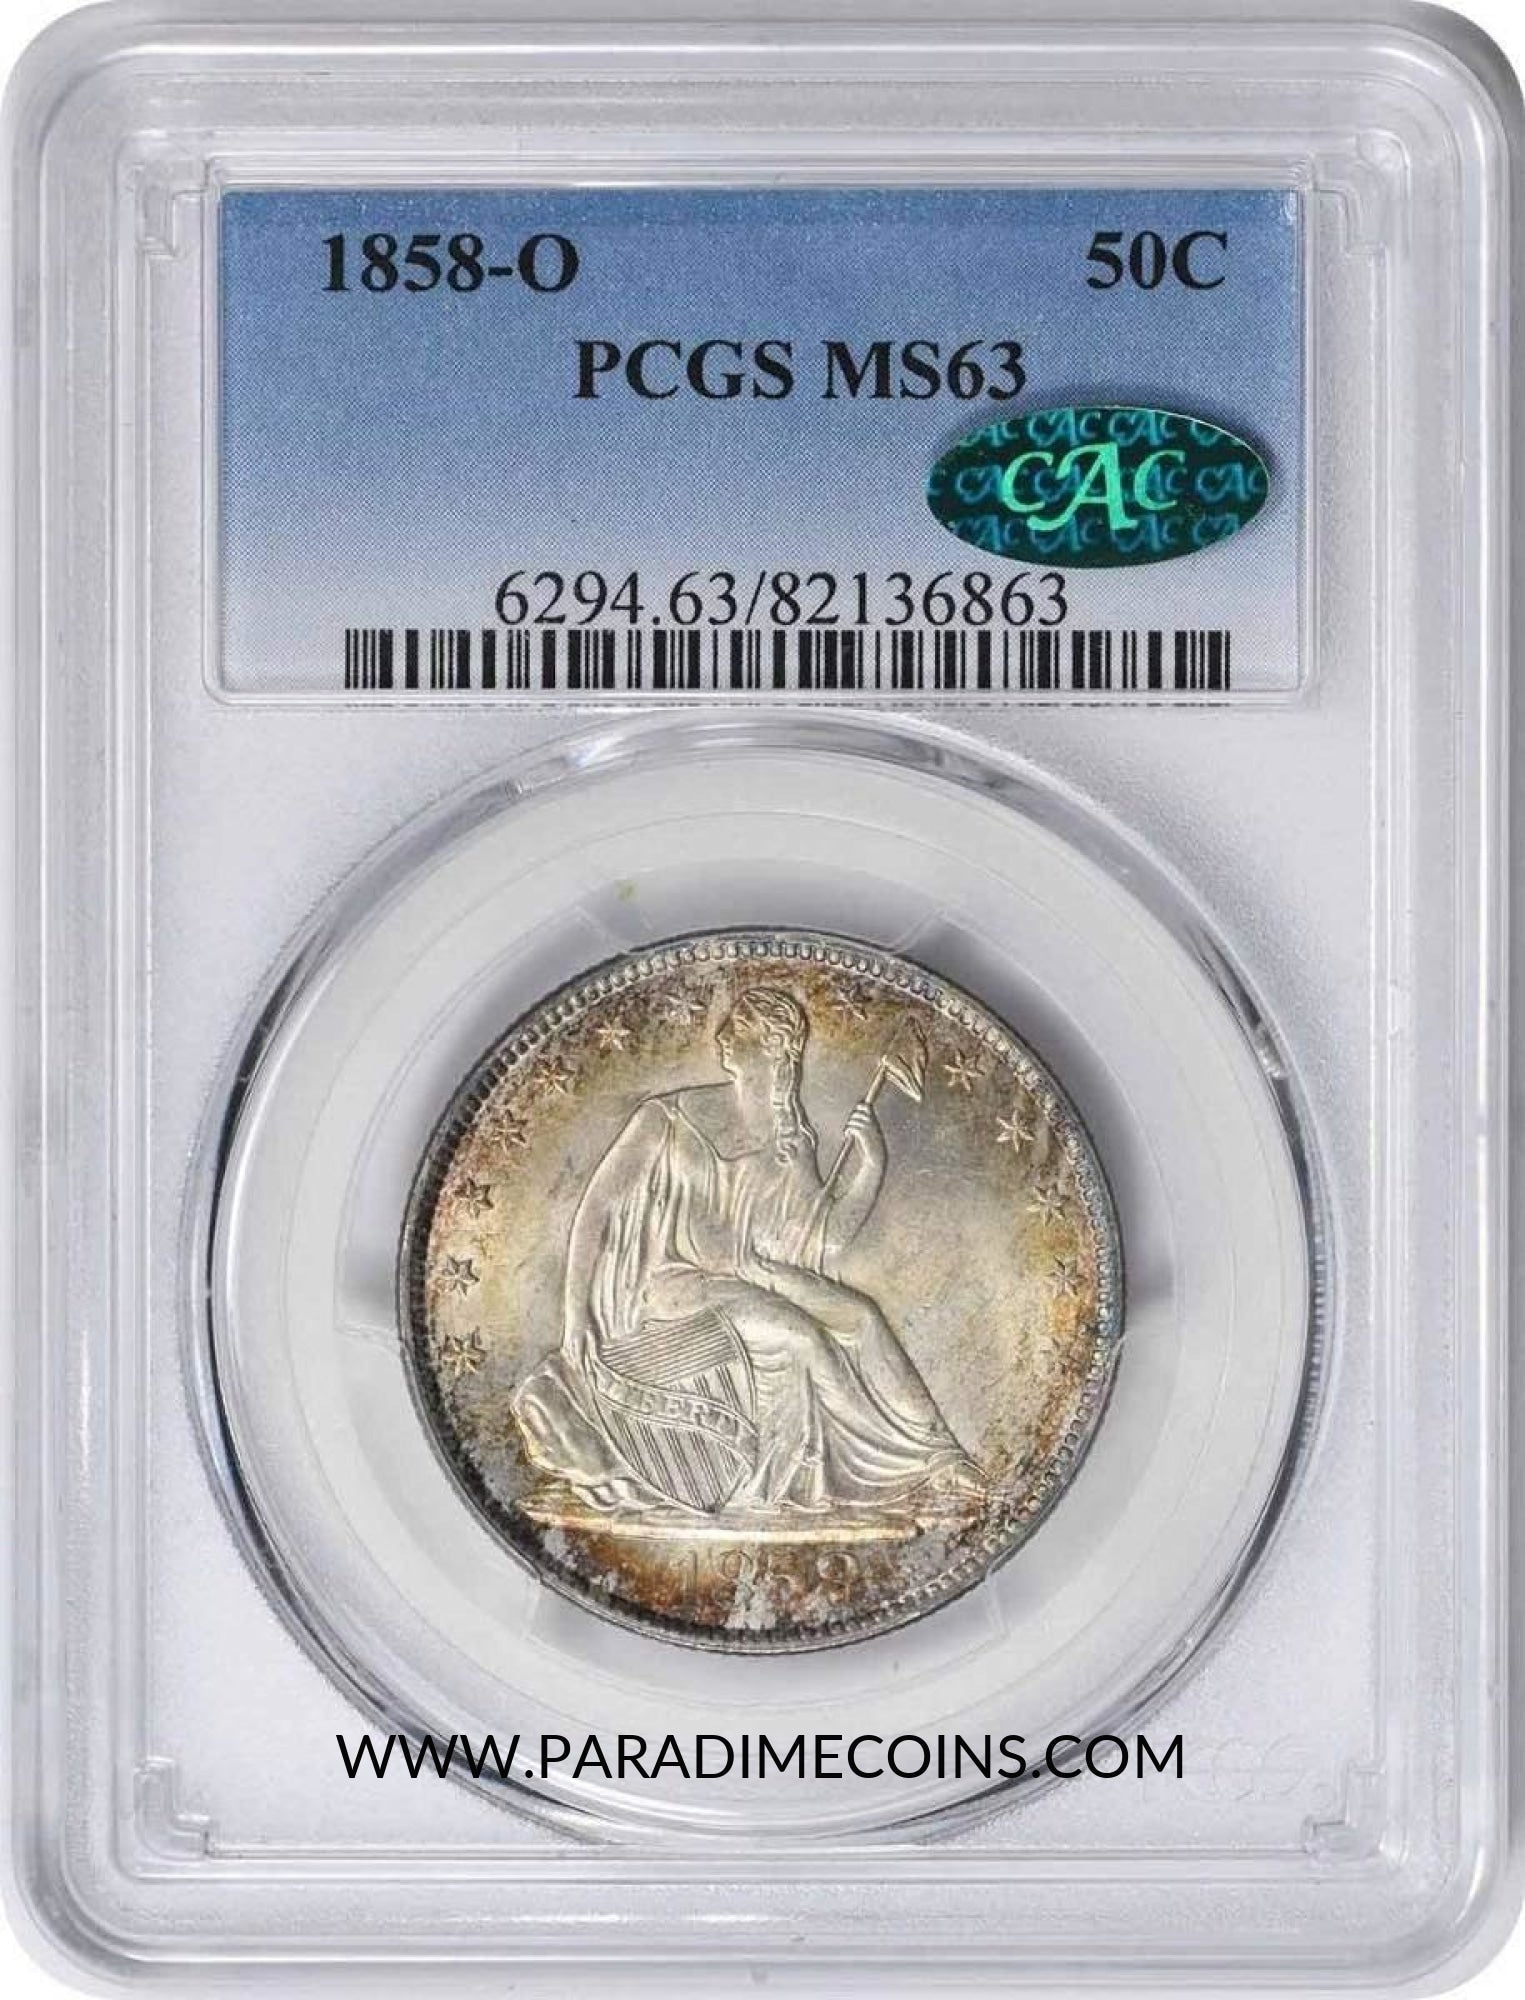 1858-O 50C MS63 PCGS CAC - Paradime Coins | PCGS NGC CACG CAC Rare US Numismatic Coins For Sale